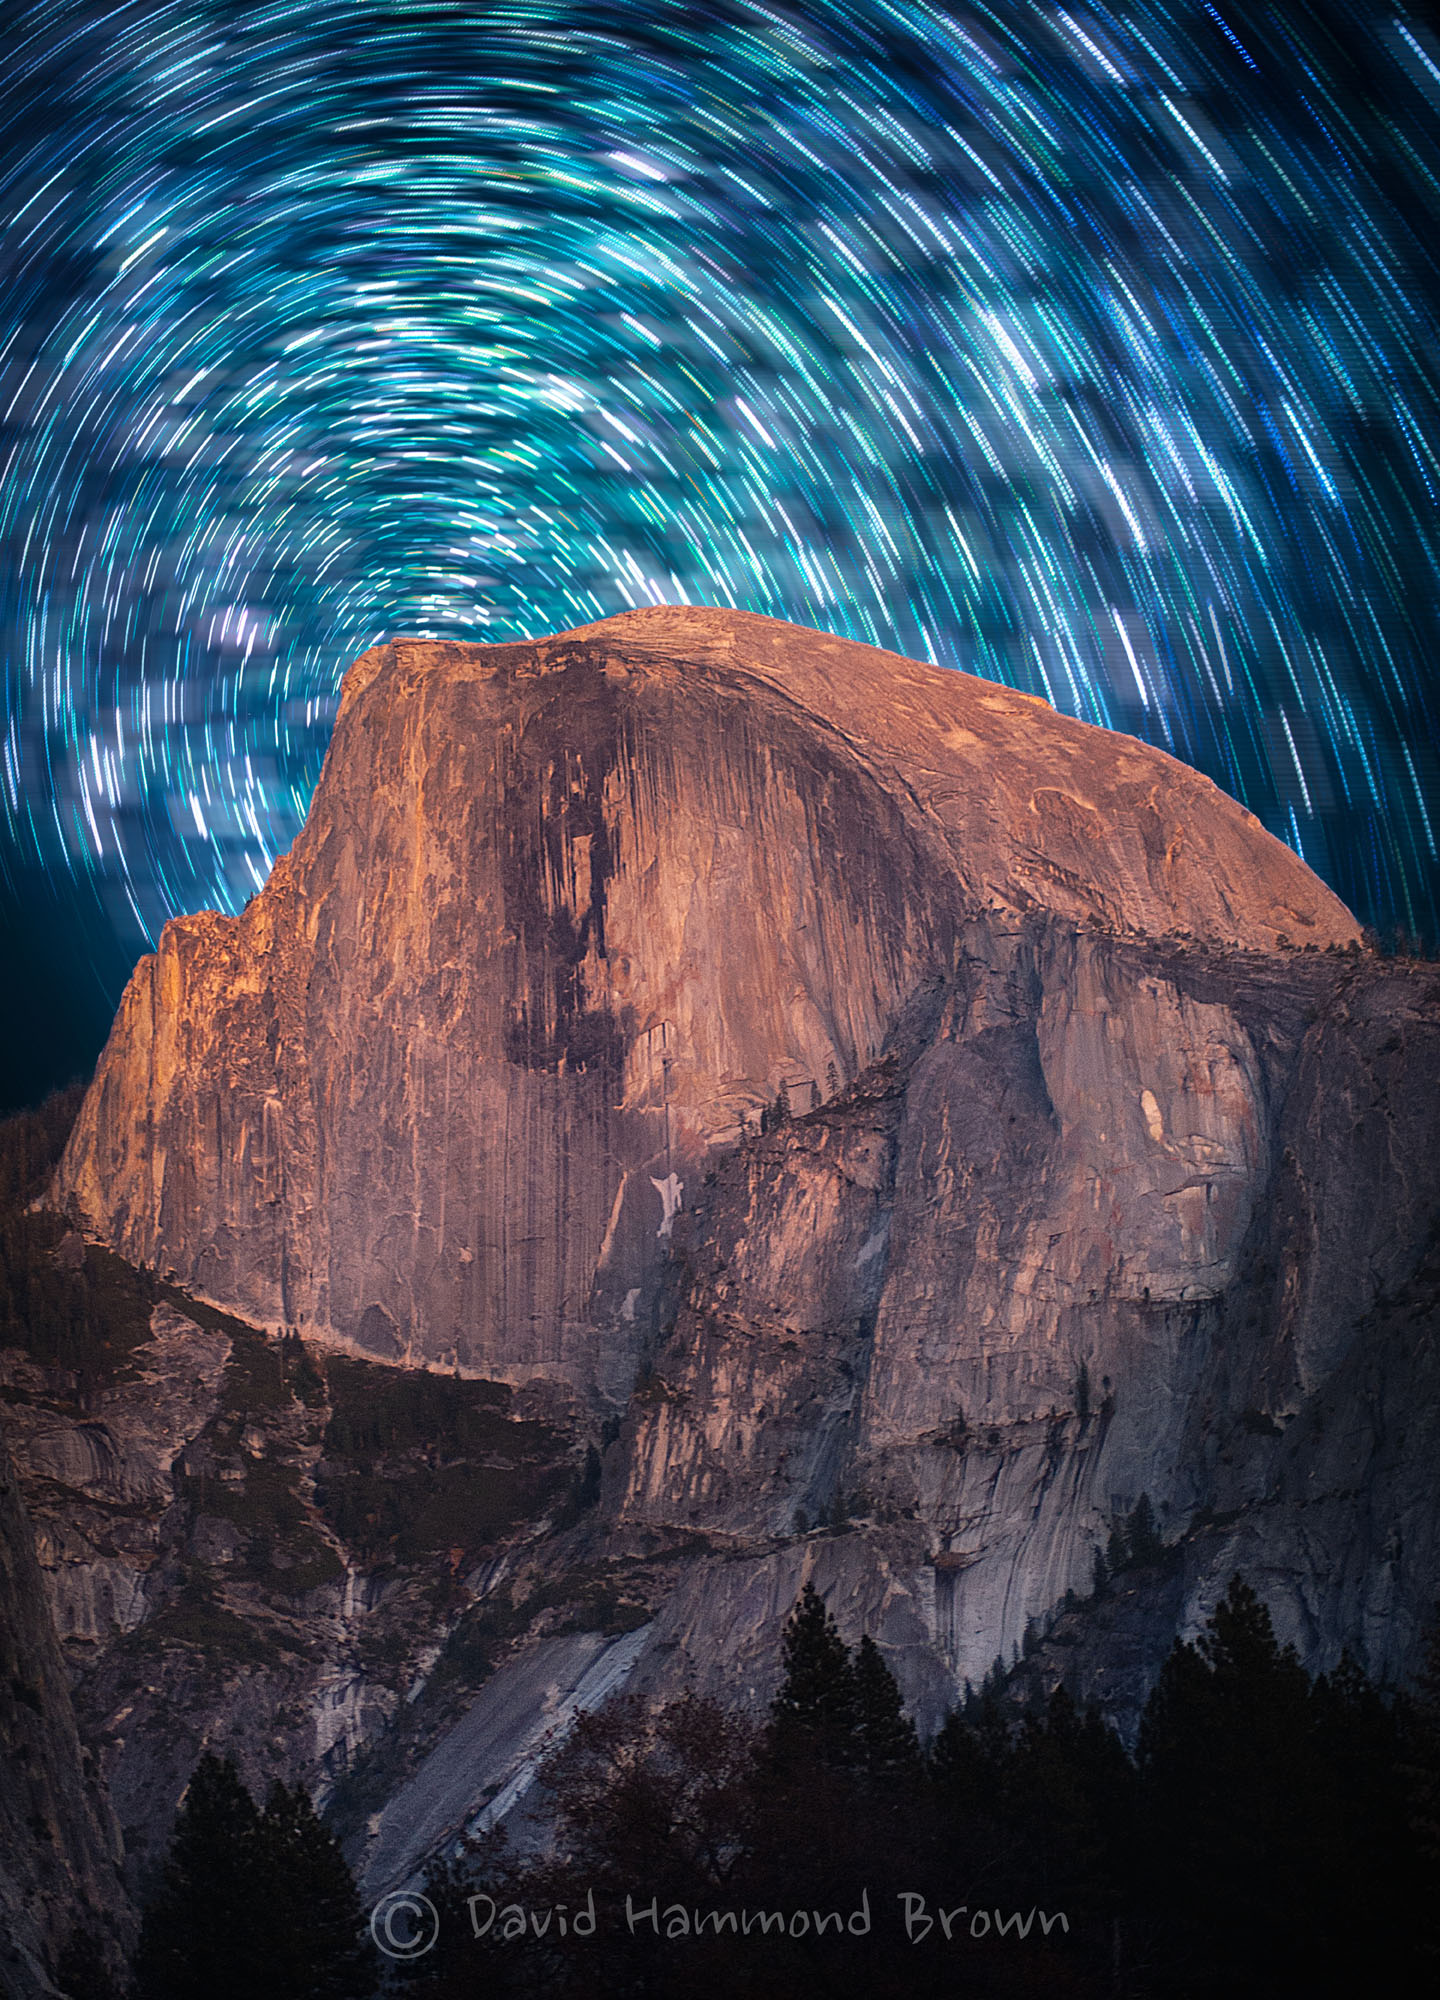 David Hammond Brown Photography - Half Dome - Yosemite National Park